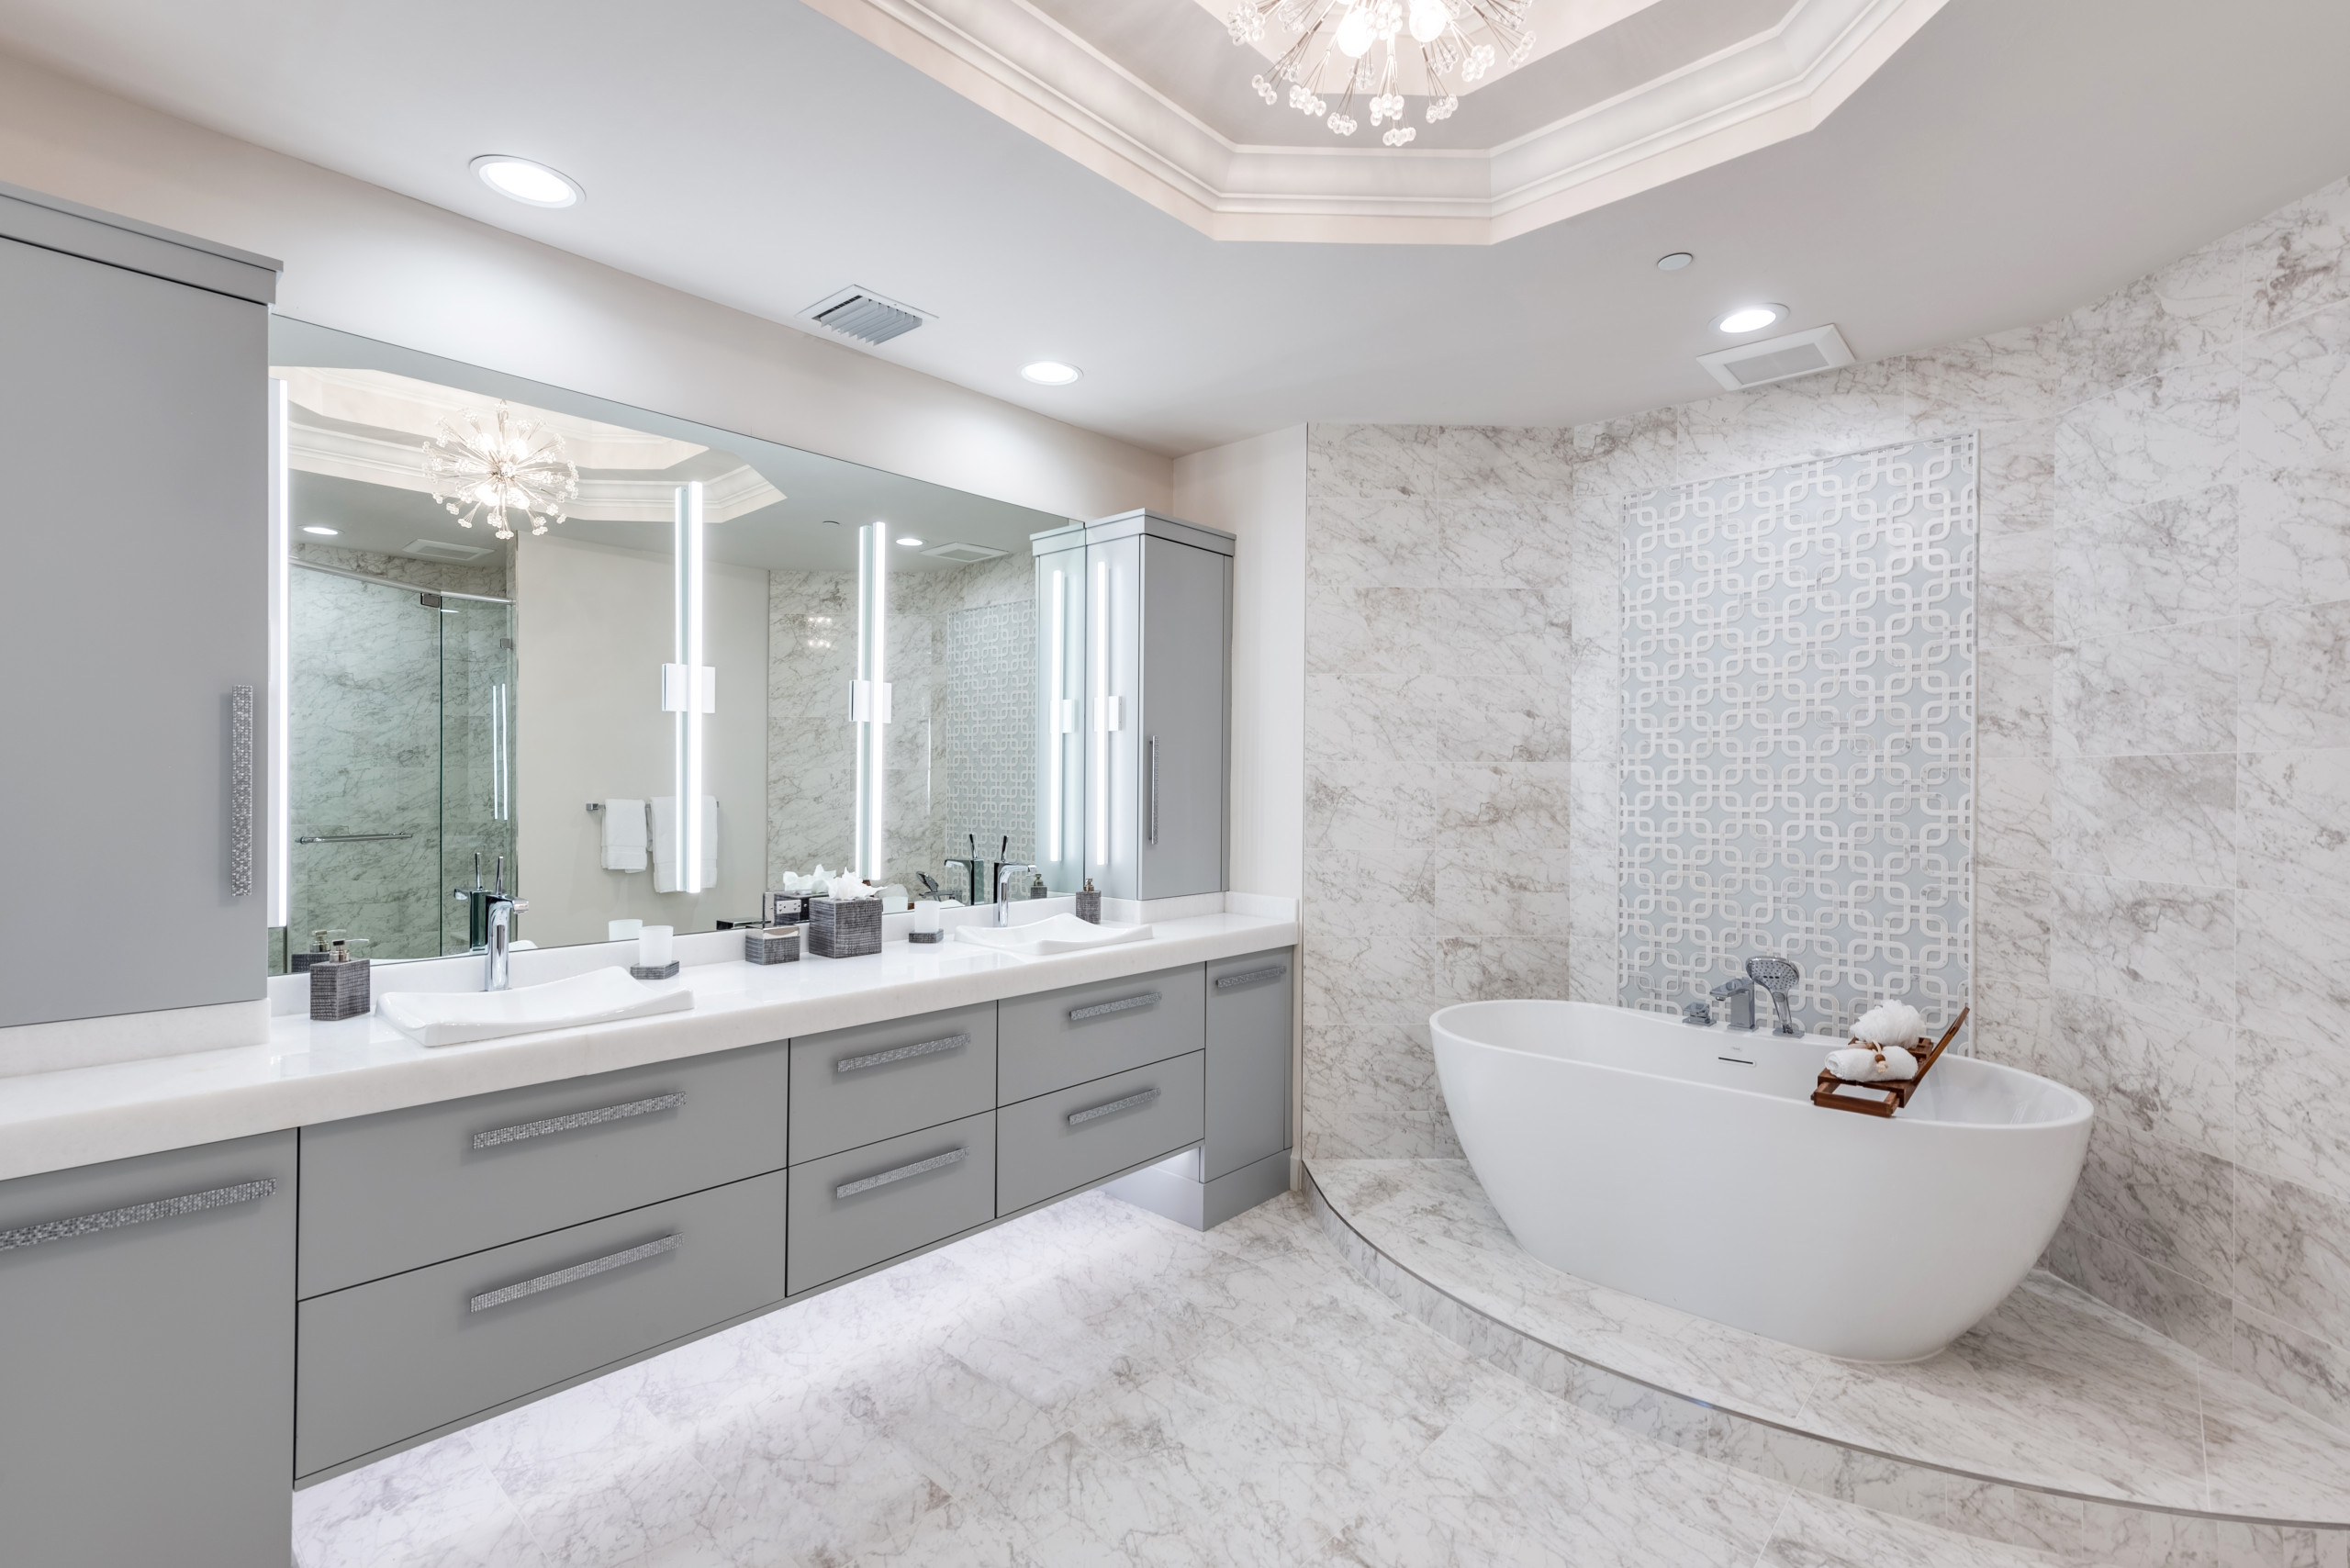 75 Beautiful Double Sink Bathroom, Double Vanity Bathroom Cabinet Ideas